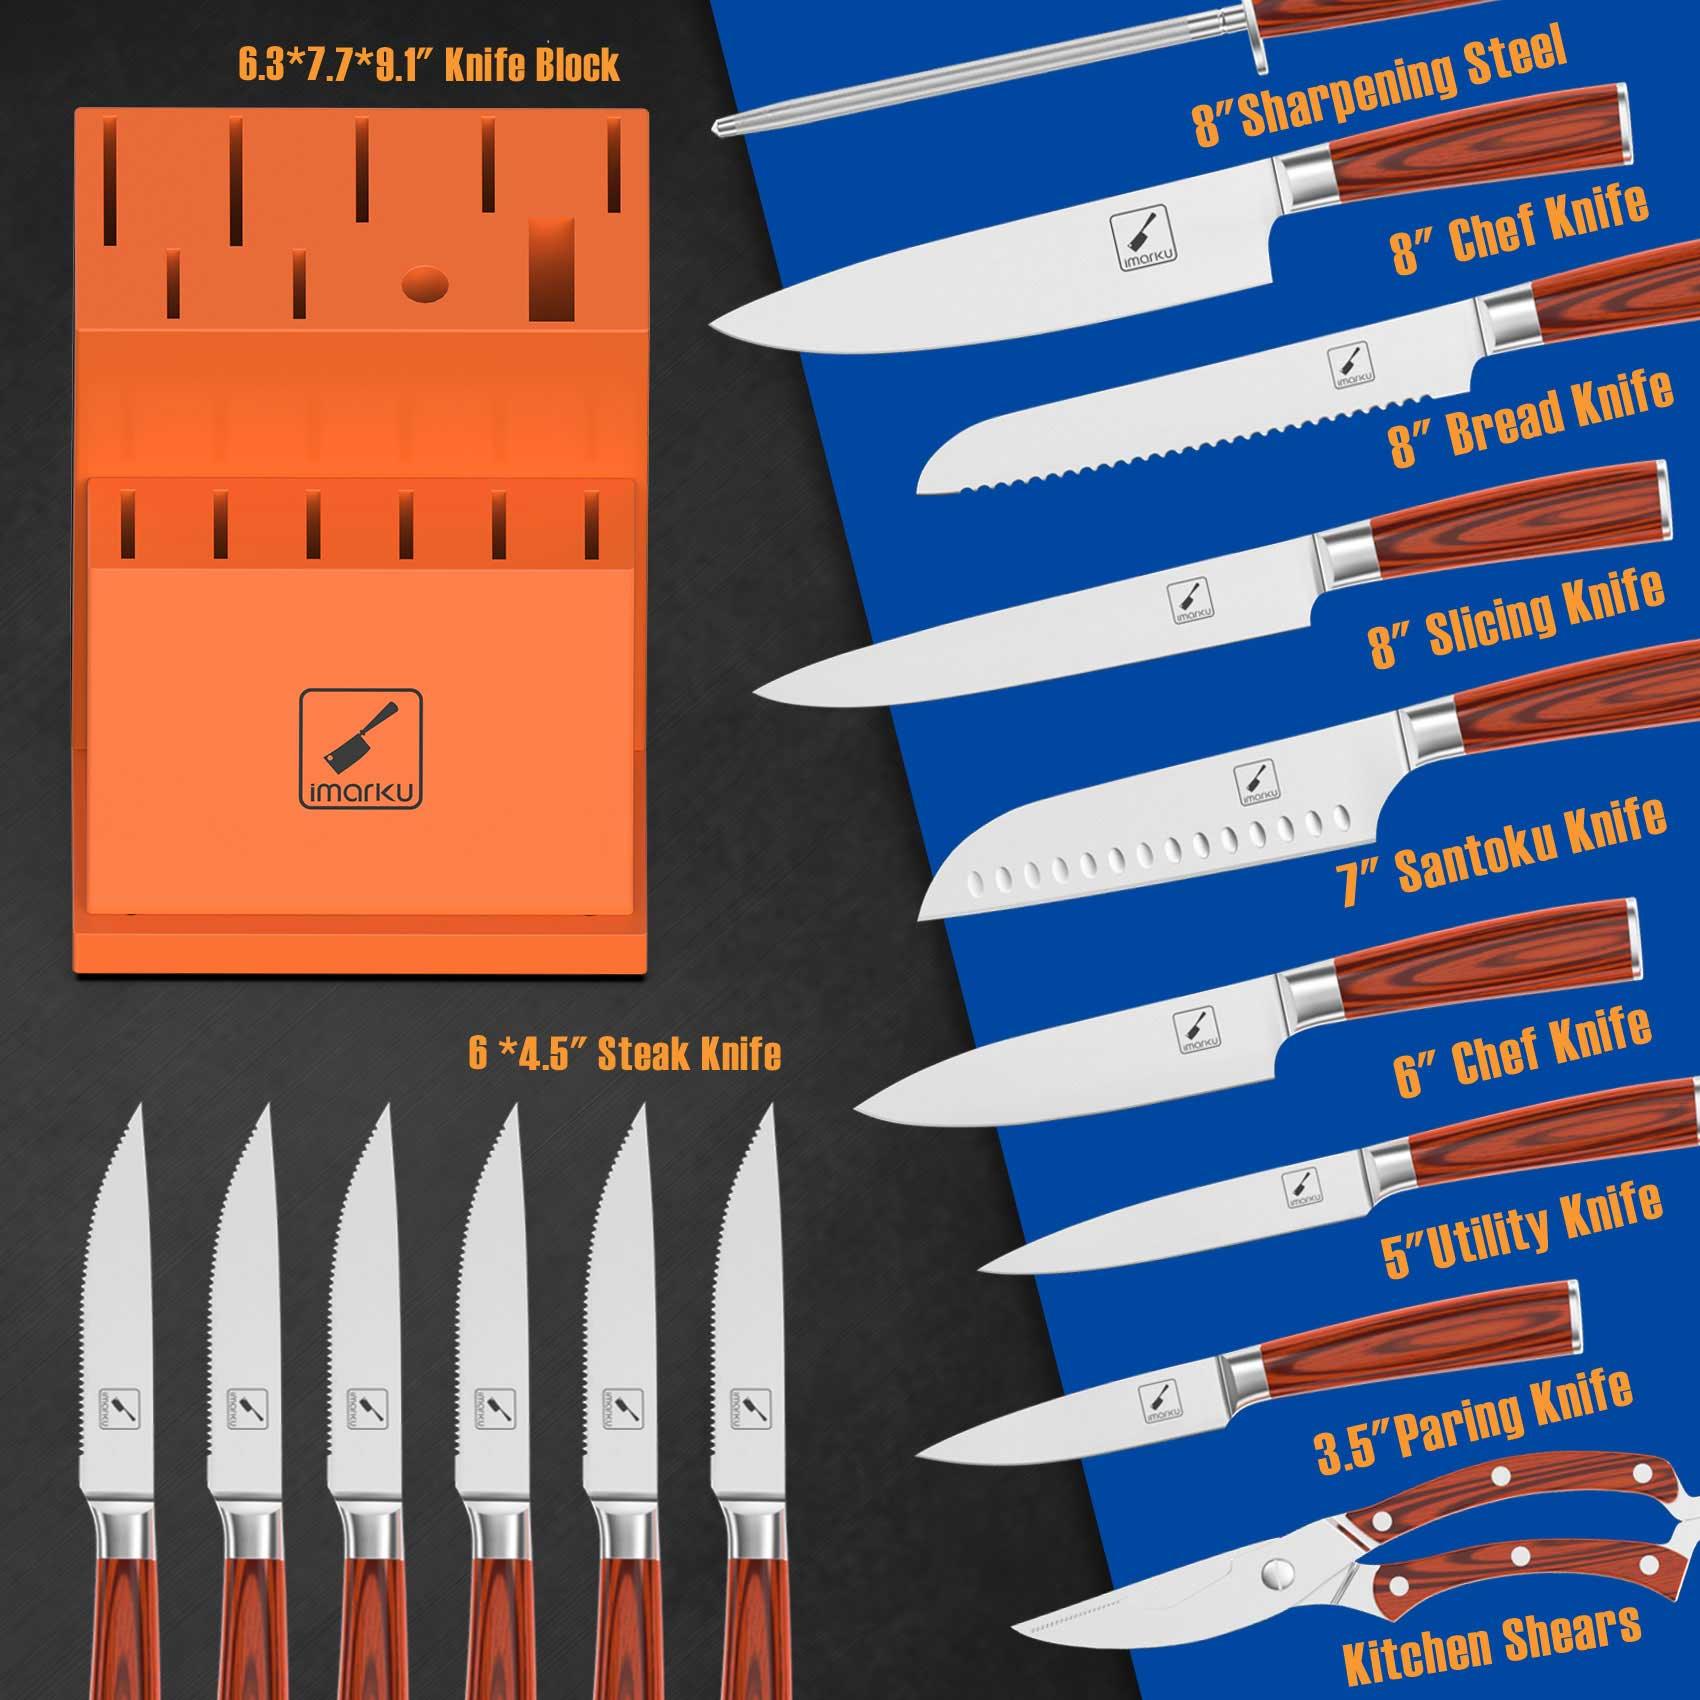 16-Piece Japanese Knife Set with Block | Best Knife Set 2023 | imarku